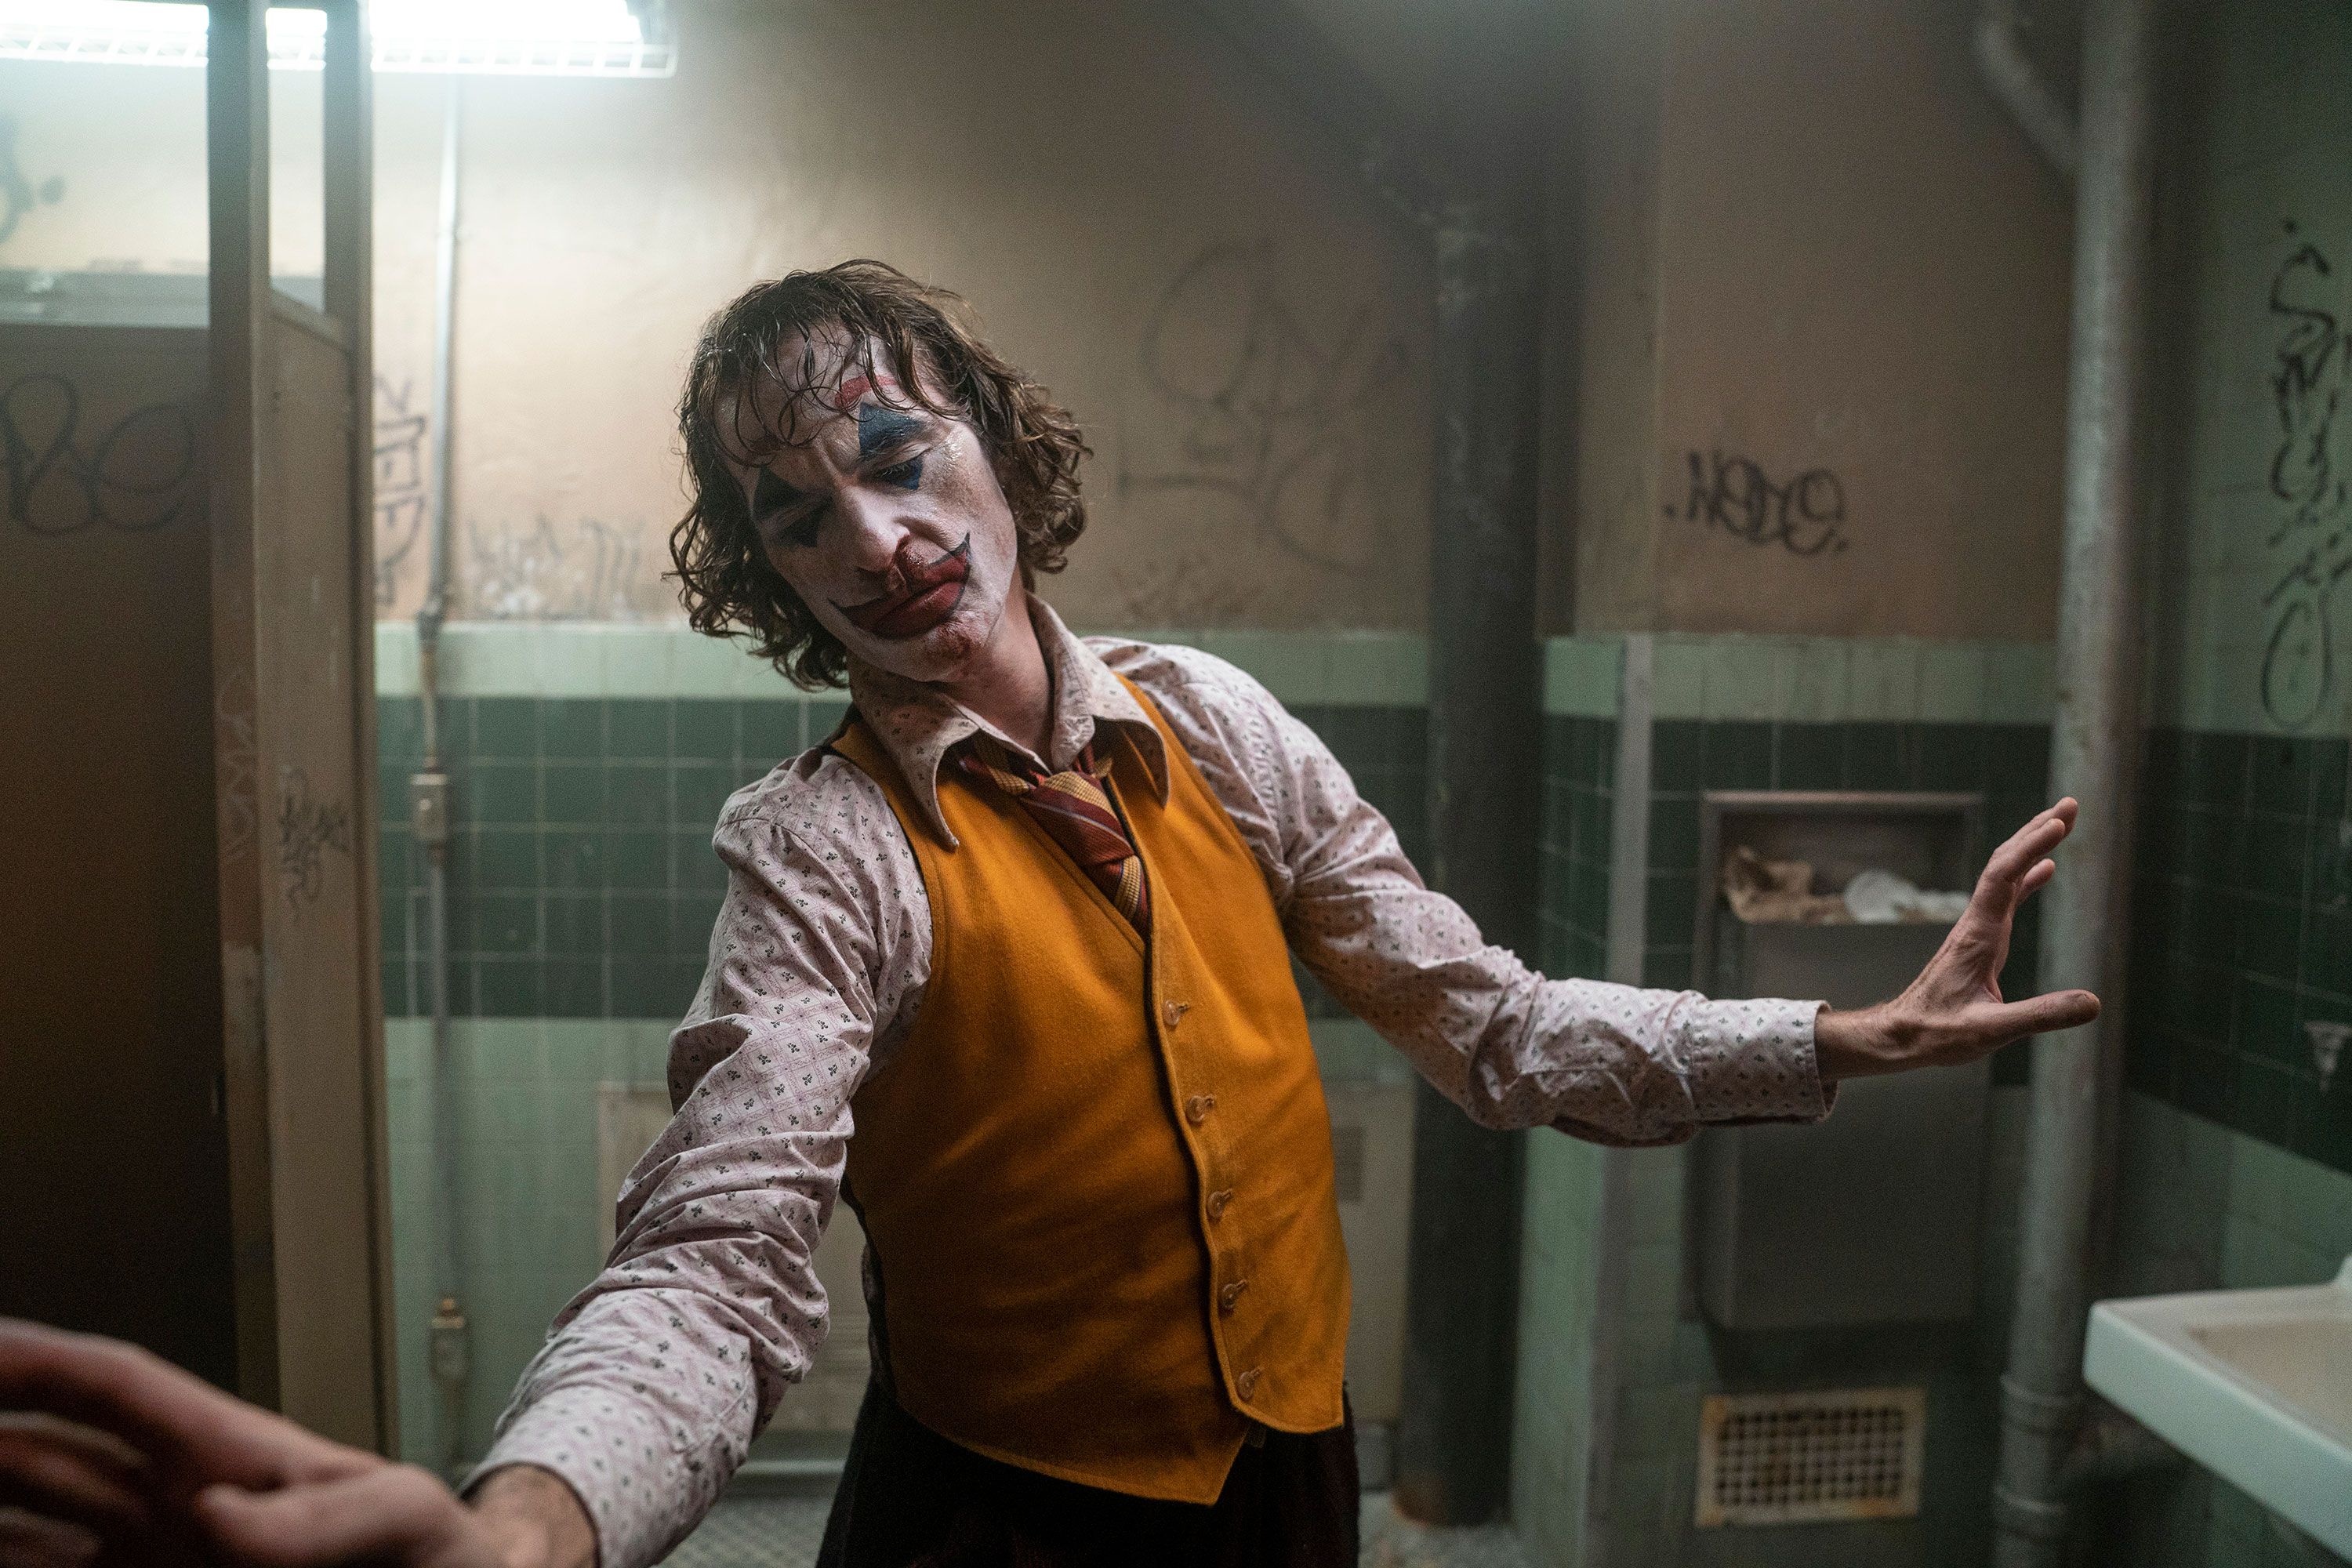 Joker’s Todd Phillips Courted For Larger DC Role By New WB/D Boss Zaslav